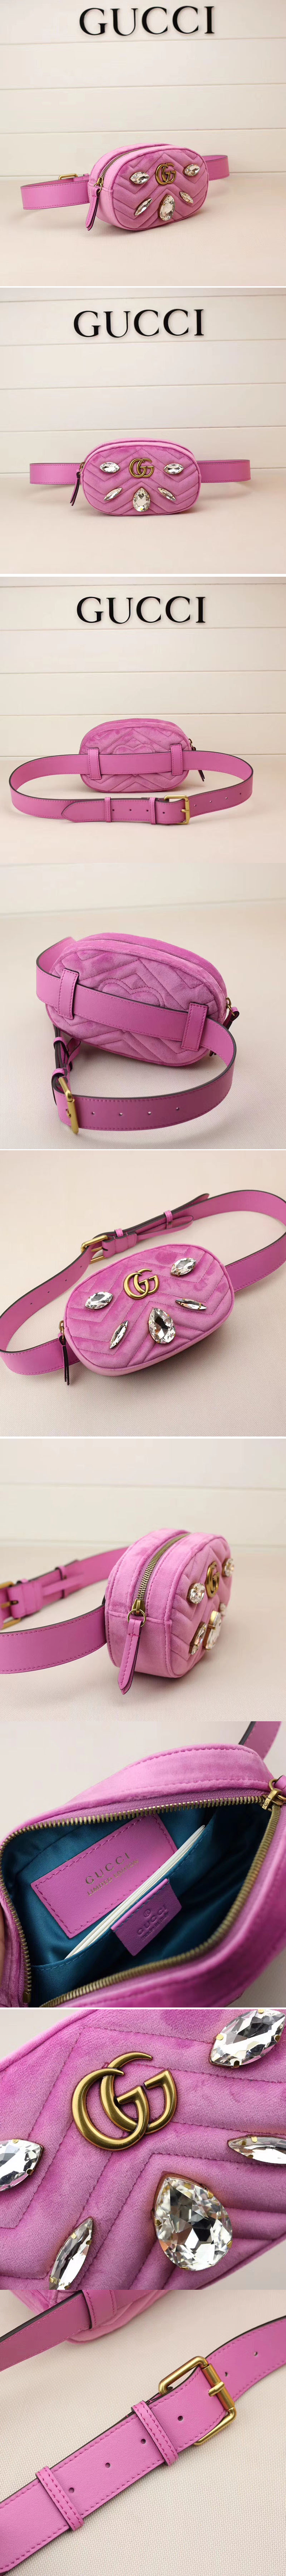 Replica Gucci 476434 GG Marmont belt bags Pink Velvet